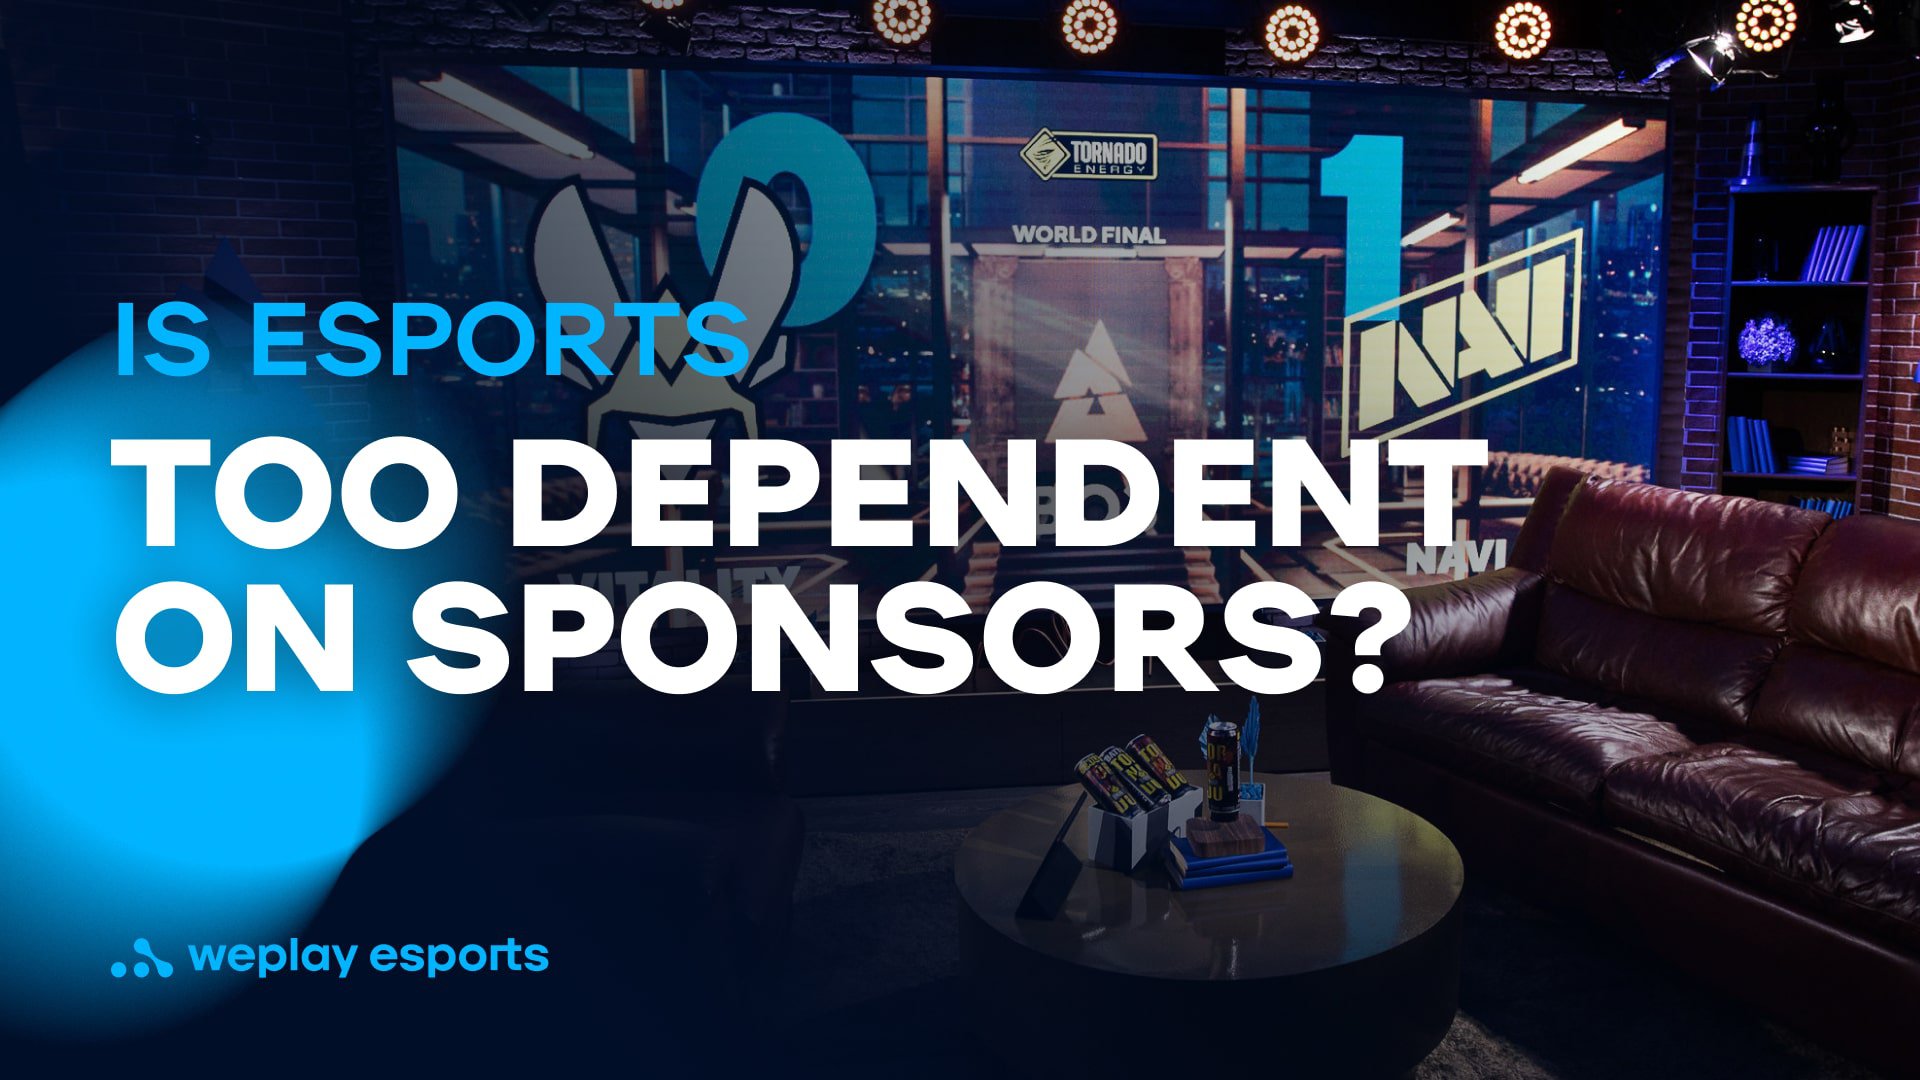 Esports and sponsorship are interrelated. Credut: WePlay Holding